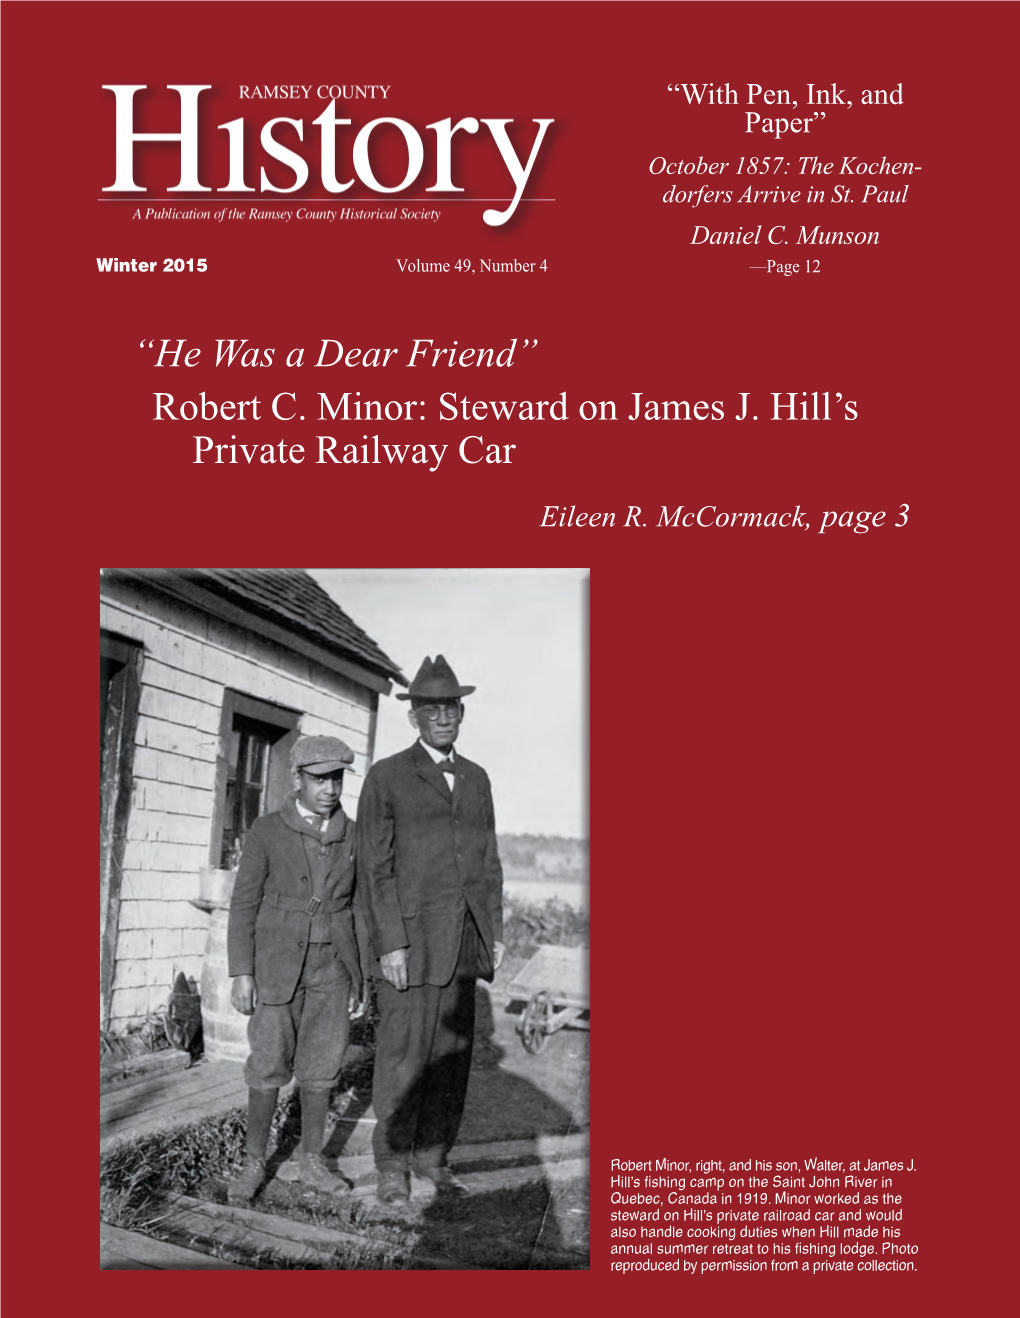 Steward on James J. Hill's Private Railway